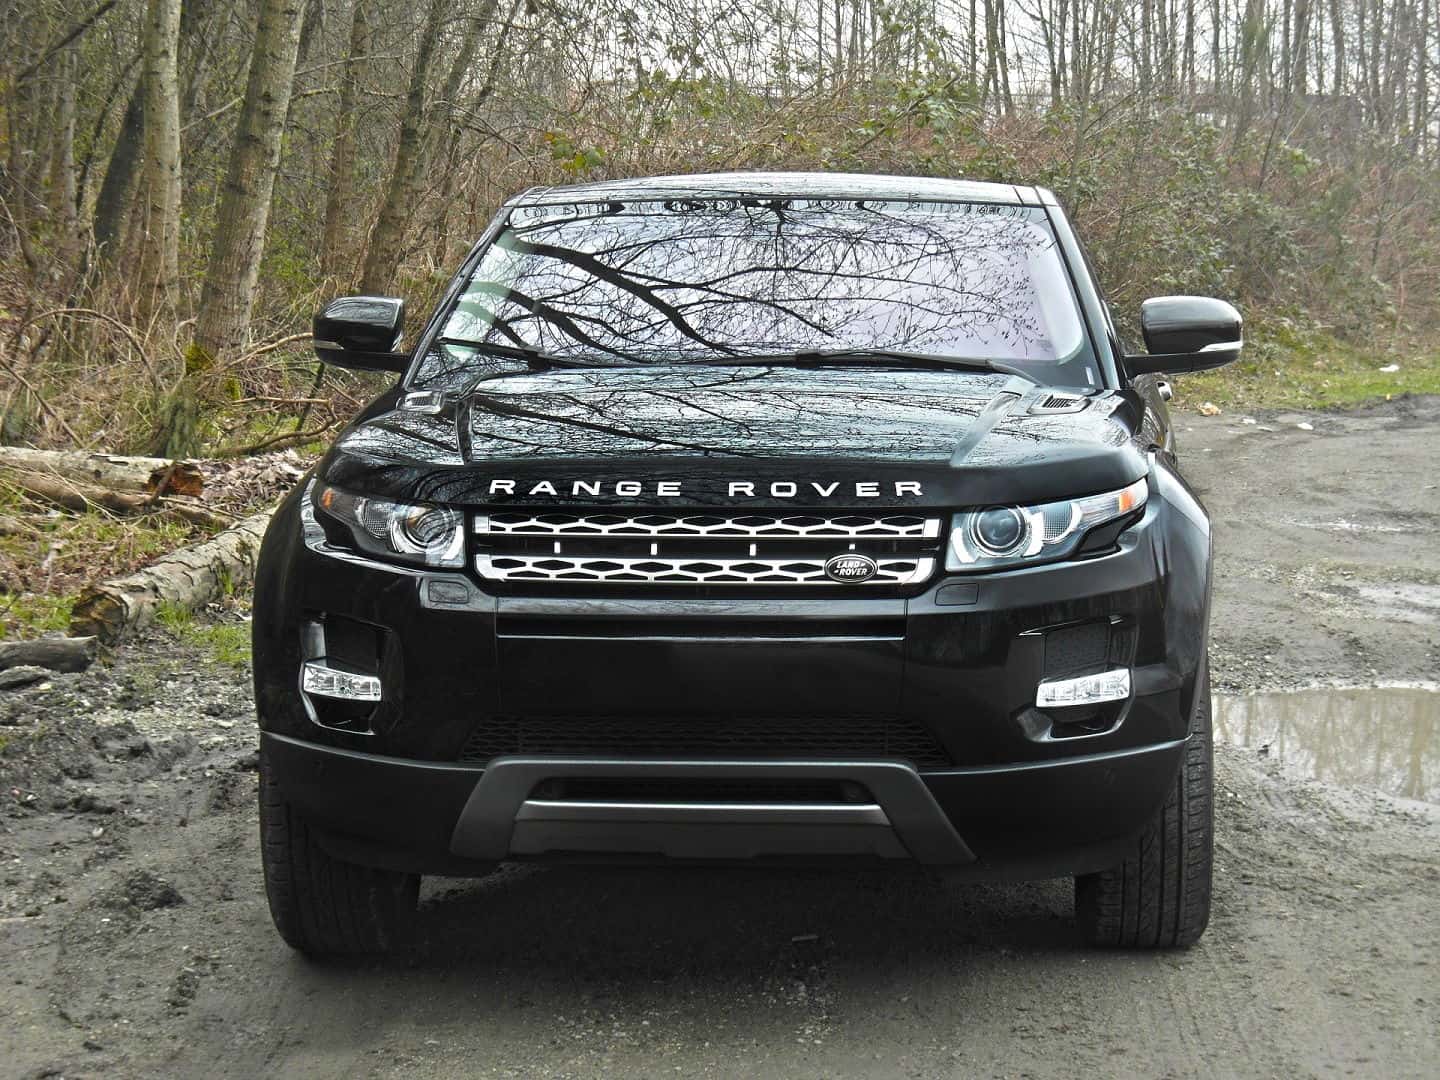 2013 Range Rover Evoque front